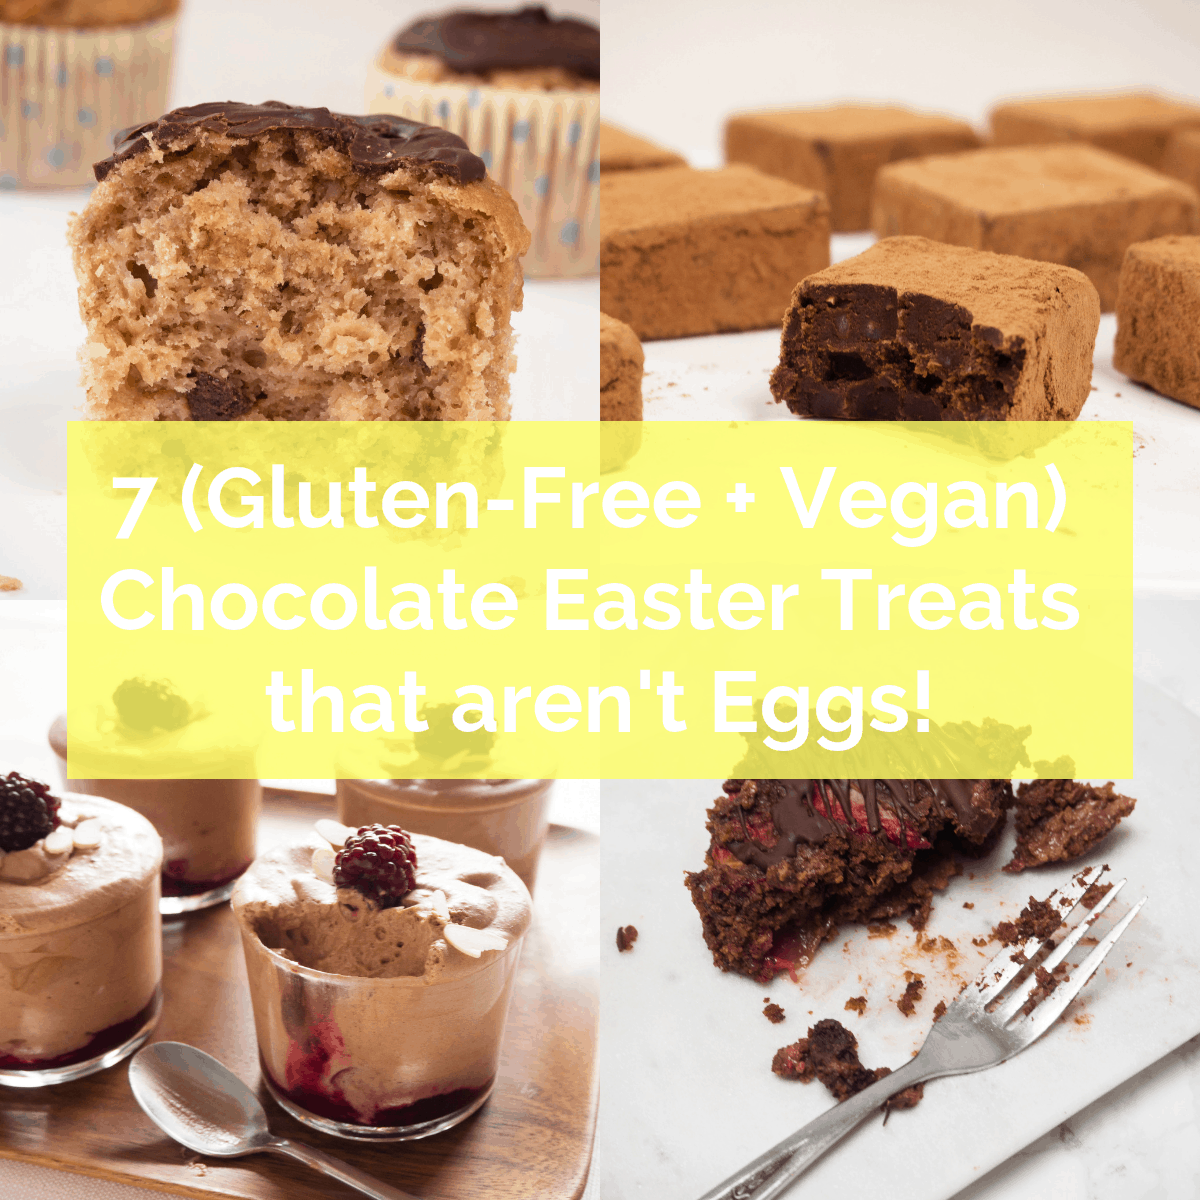 7 (Gluten-Free + Vegan) Chocolate Easter Treats that aren't Eggs! #GlutenFree #Vegan #GlutenFreeVegan. From #FriFran